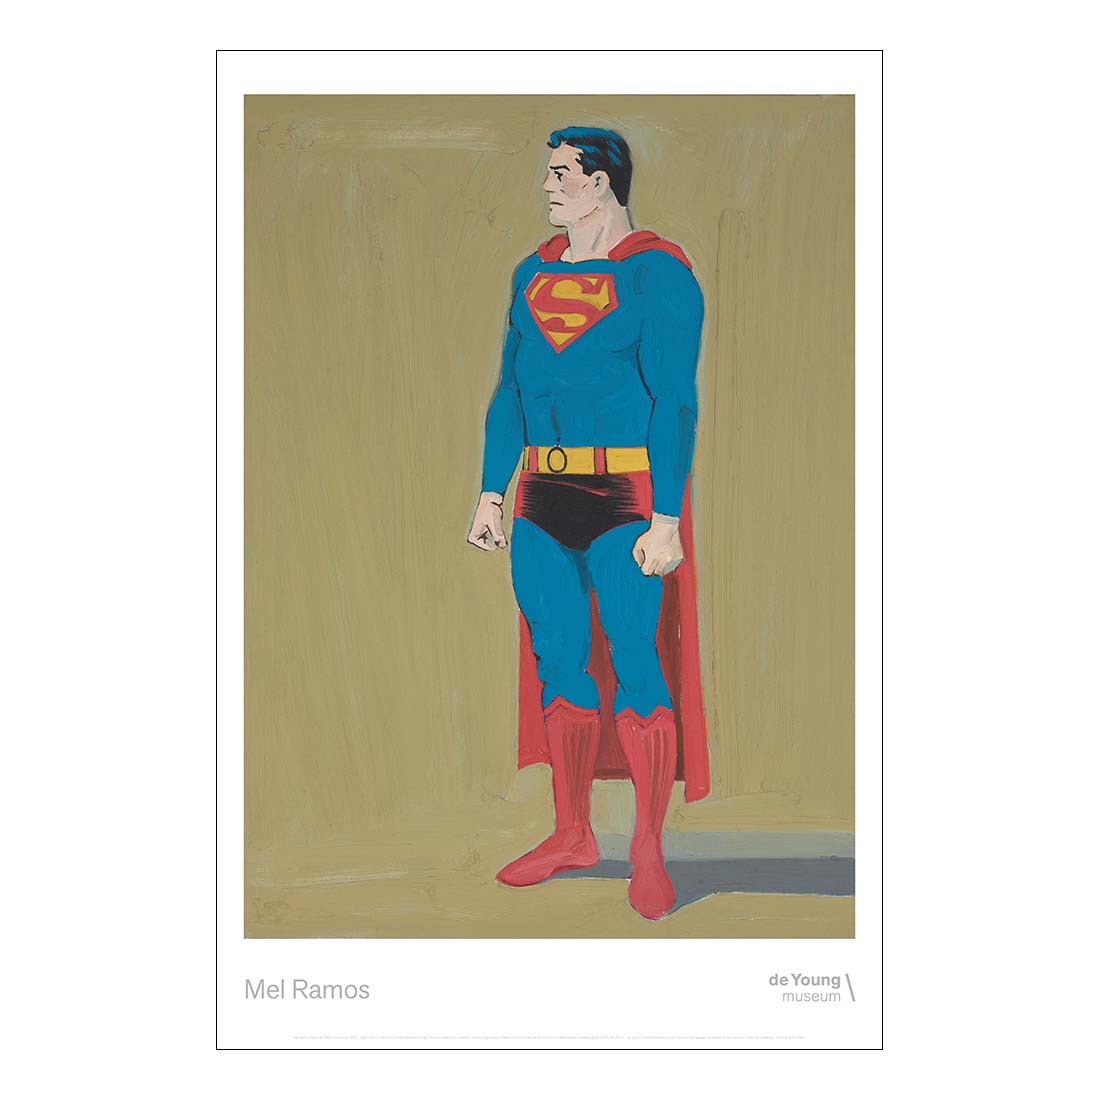 Ramos Superman Poster